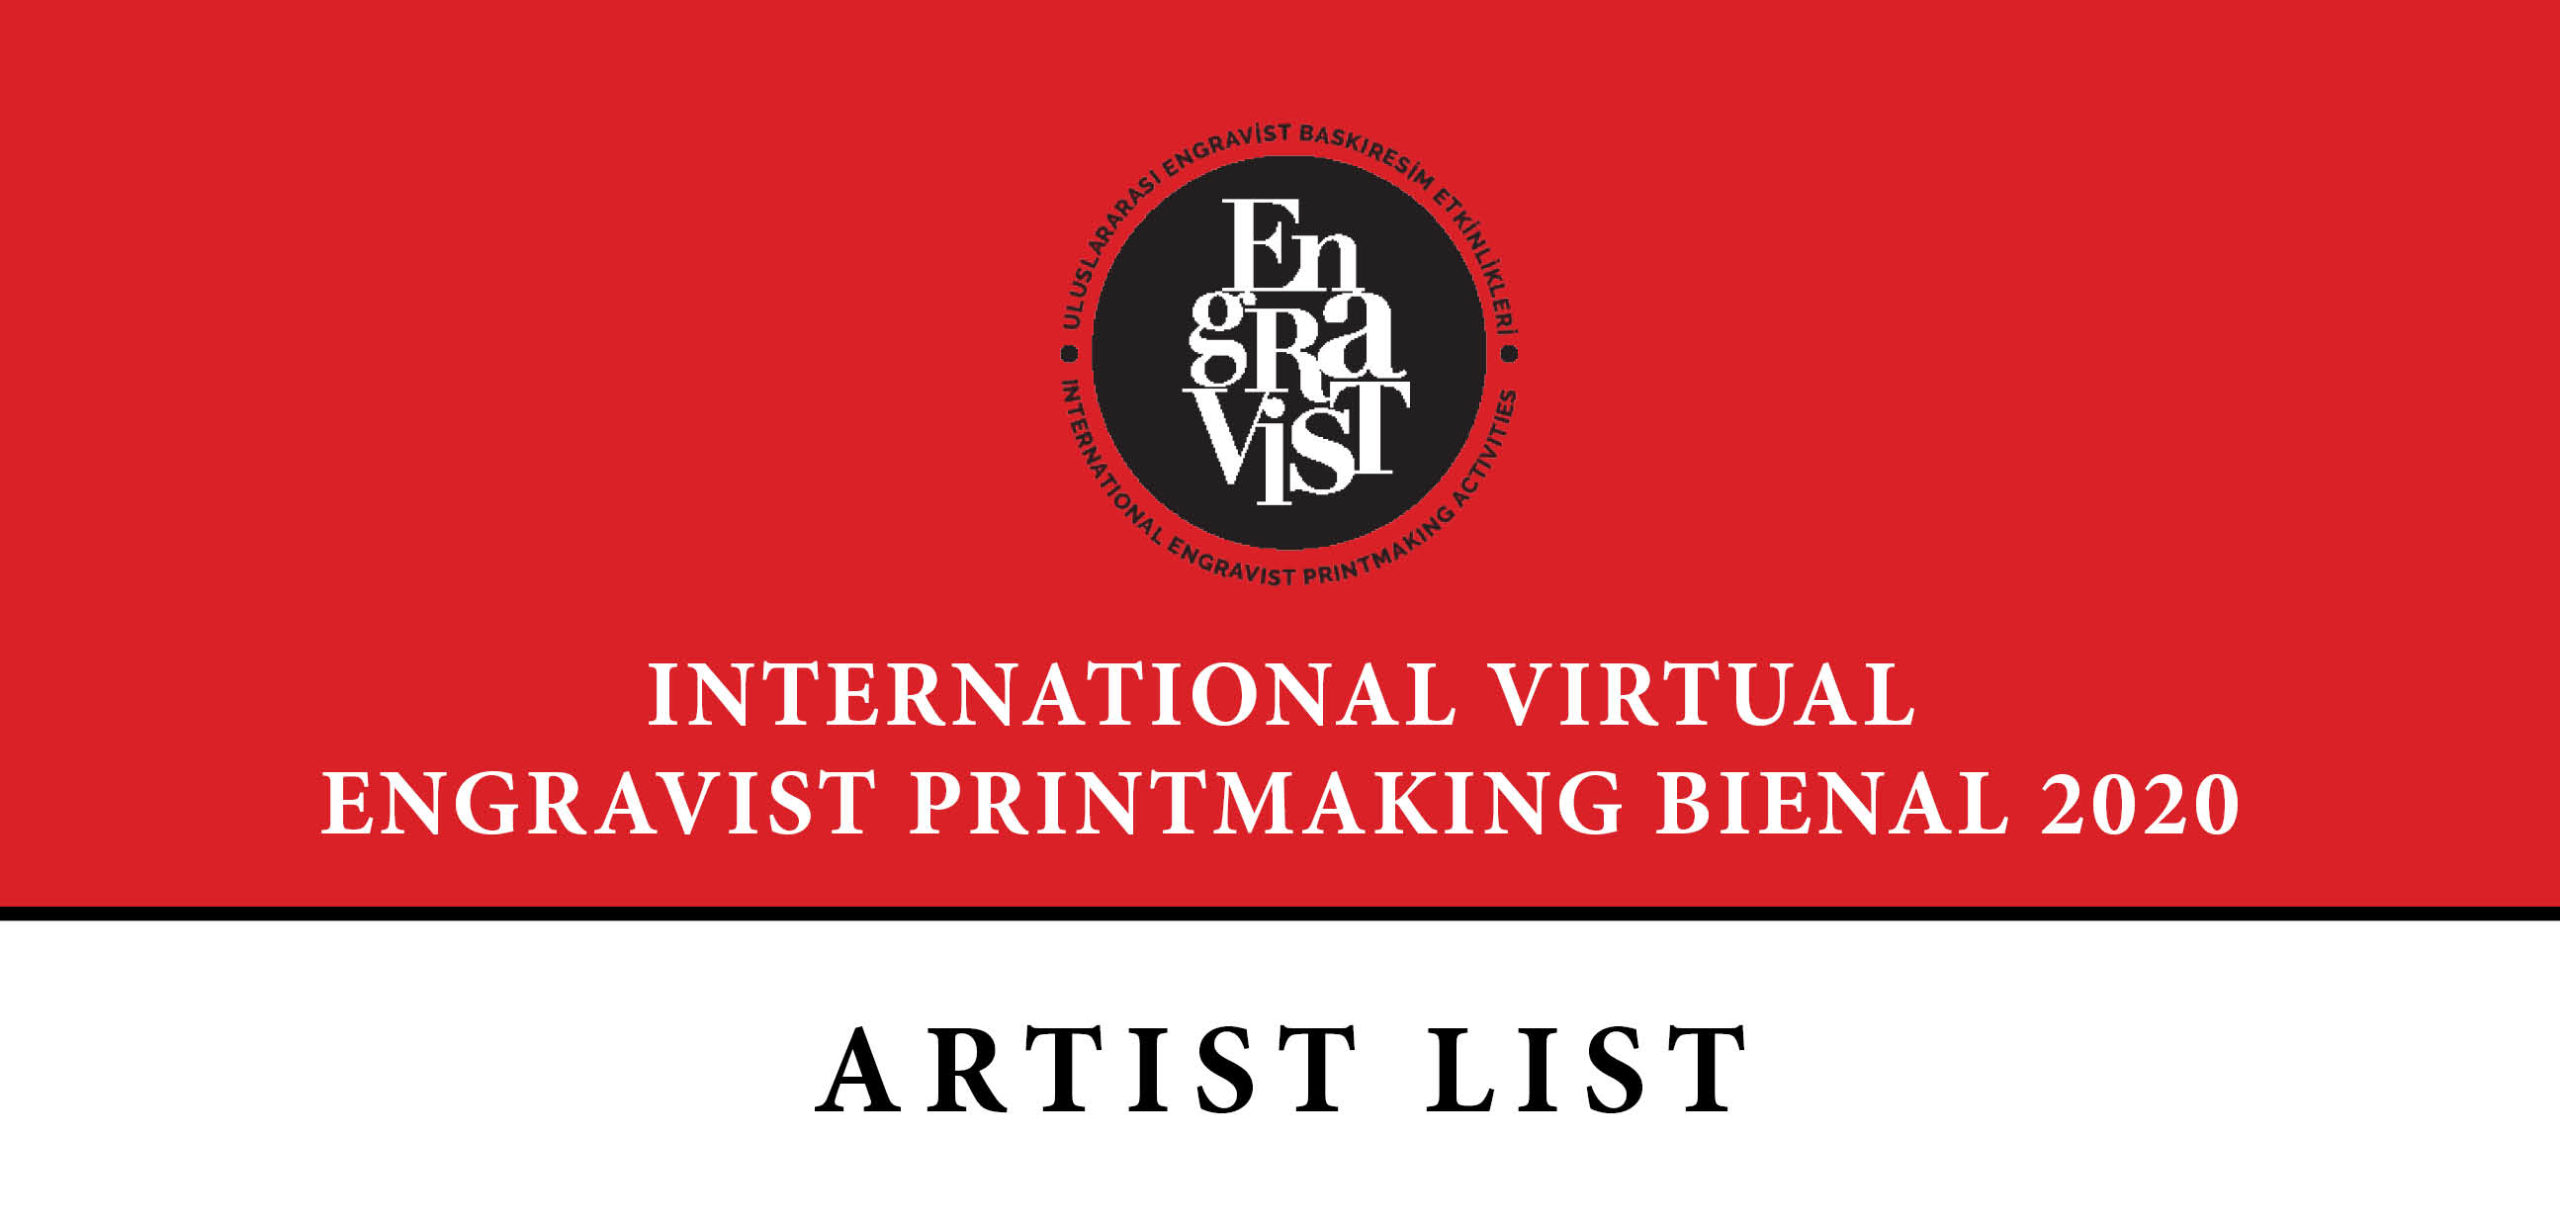 ARTISTS LIST – International Virtual Engravist Printmaking Bienal